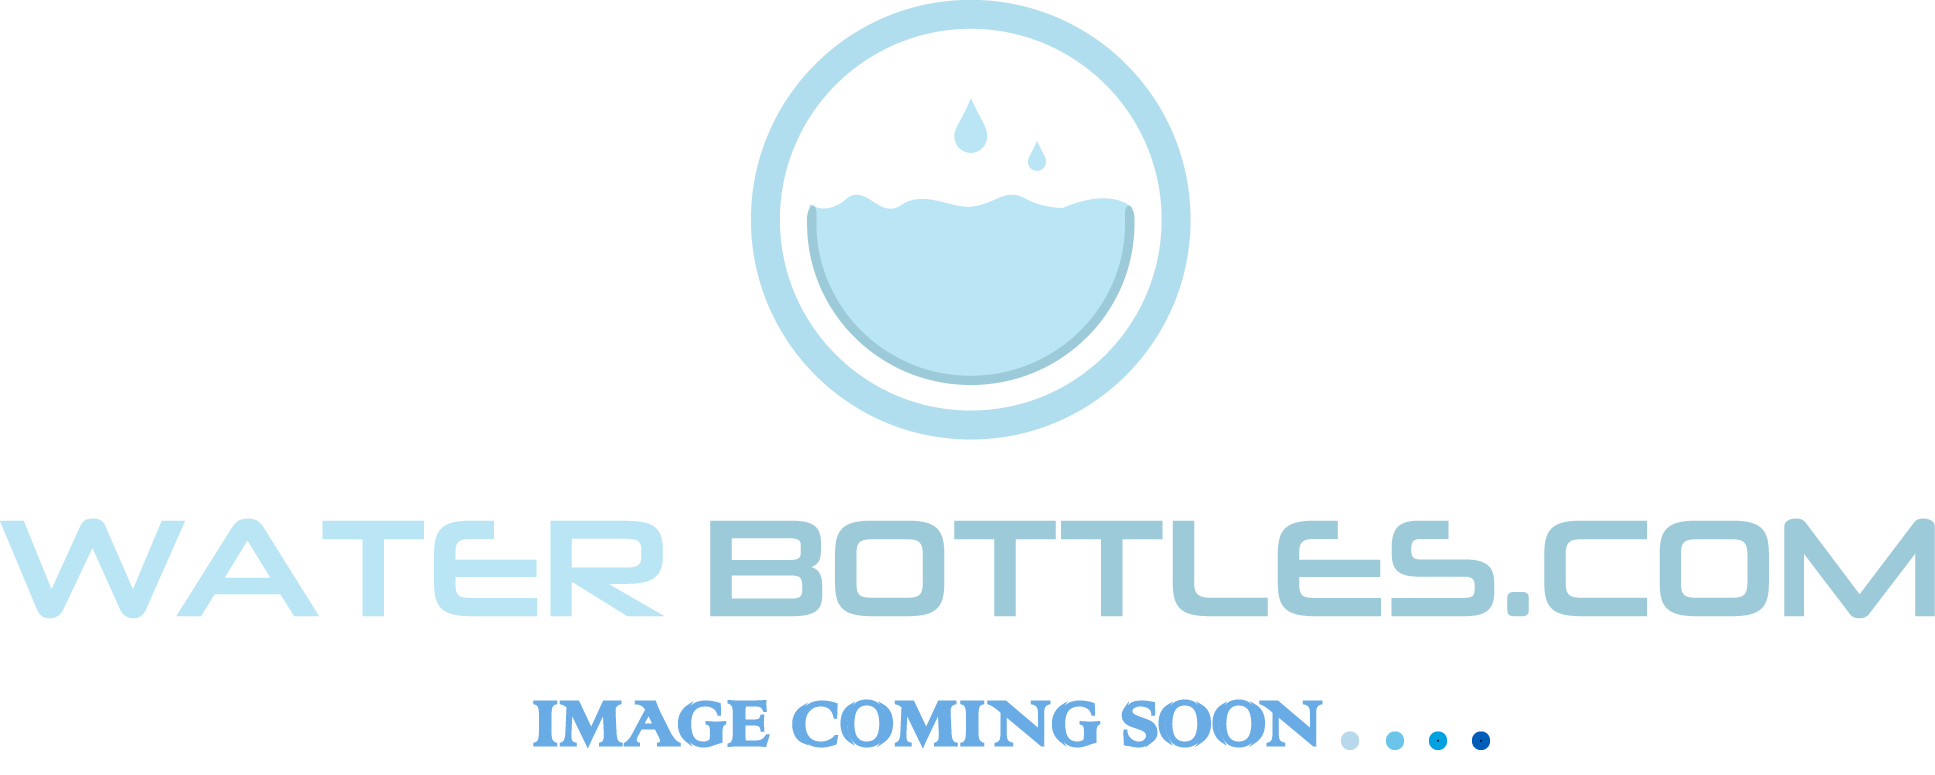 25 Oz US Tritan BPA Free Sport Water Bottle with Flip-Flop Lid Diller Water Bottle with Straw